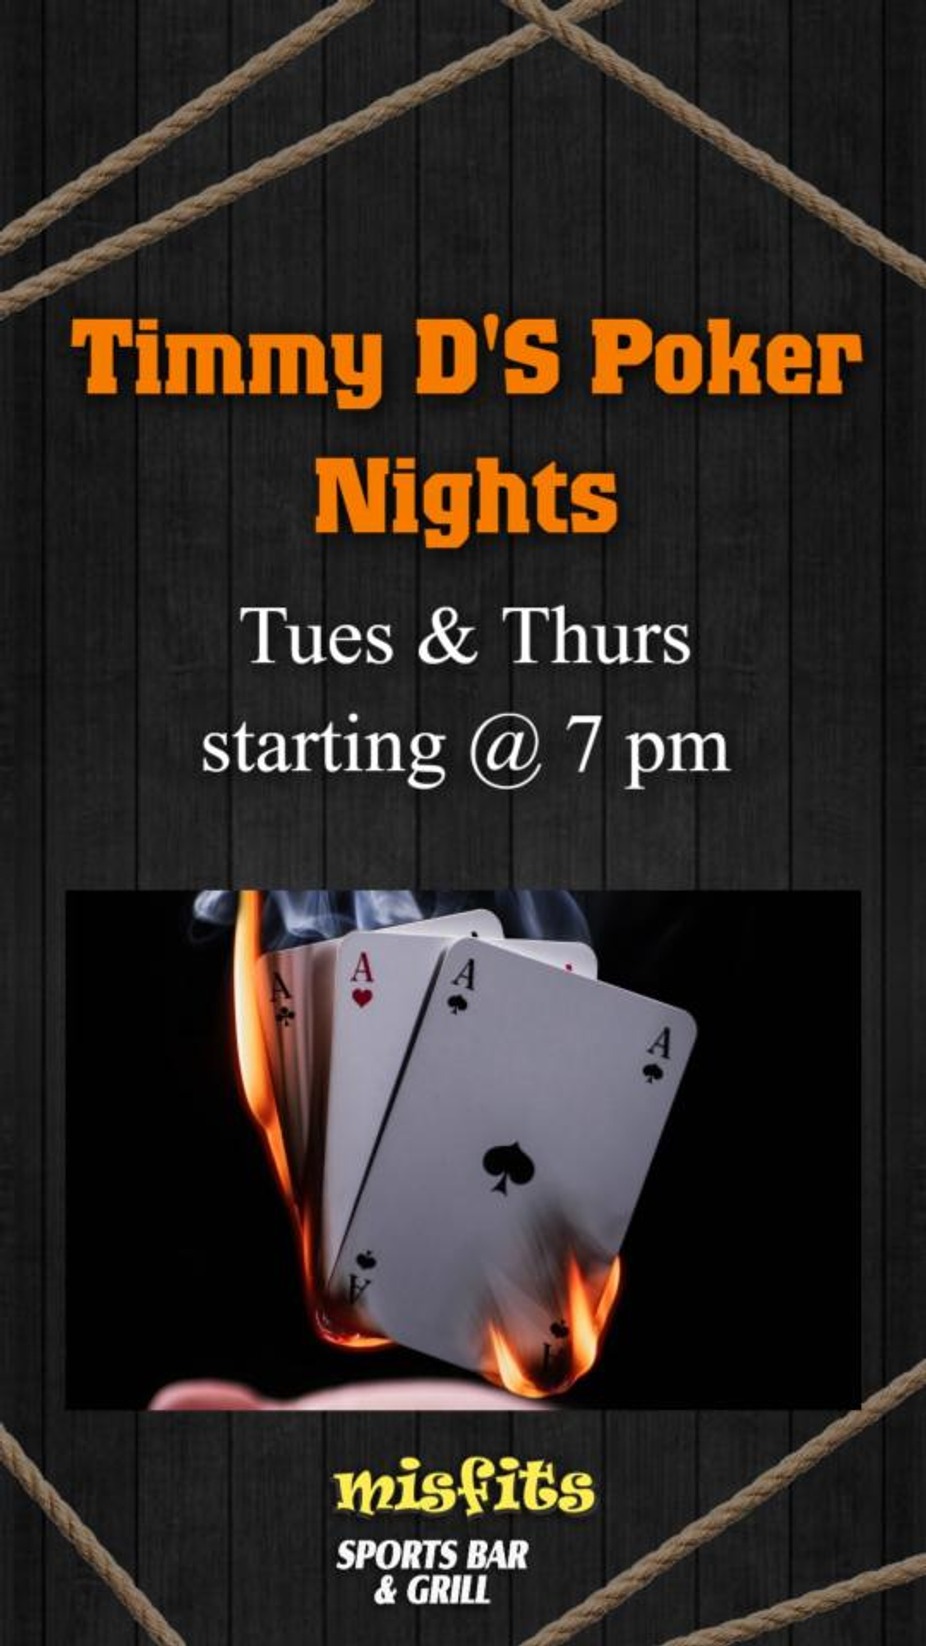 Timmy D's Thursday Poker Night event photo